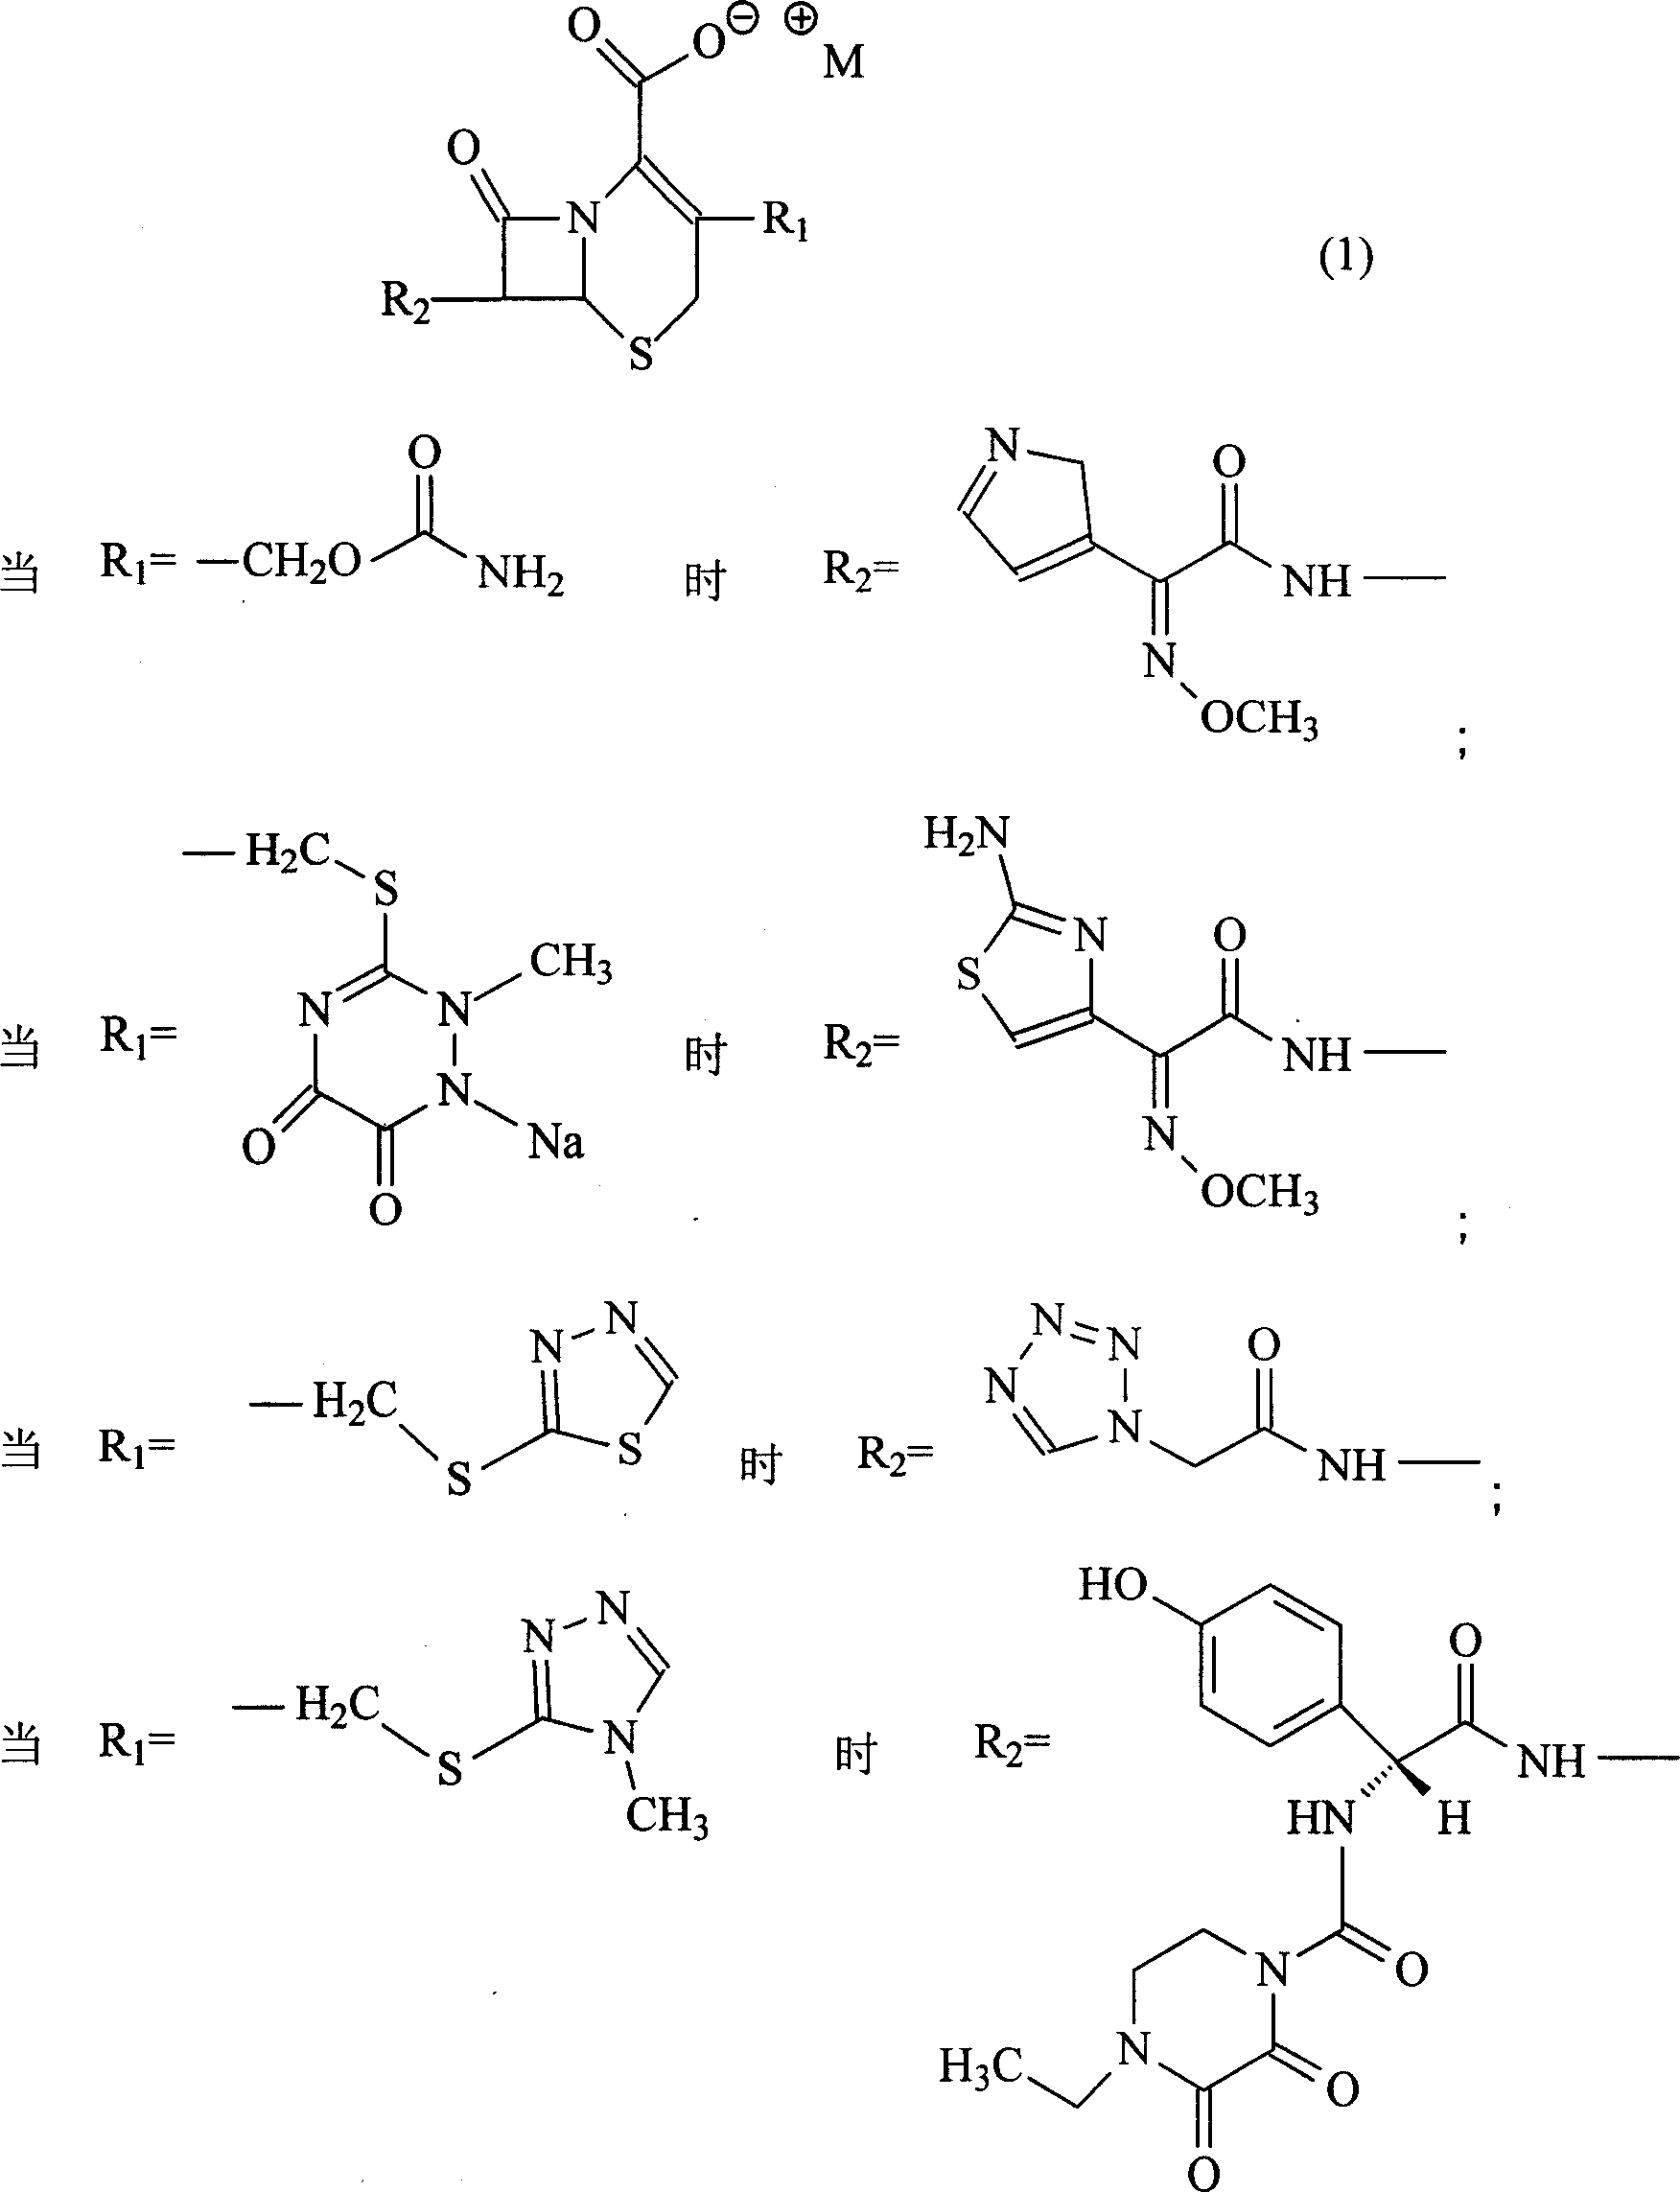 Organic amine salt of cephalosporin compound and its preparation method